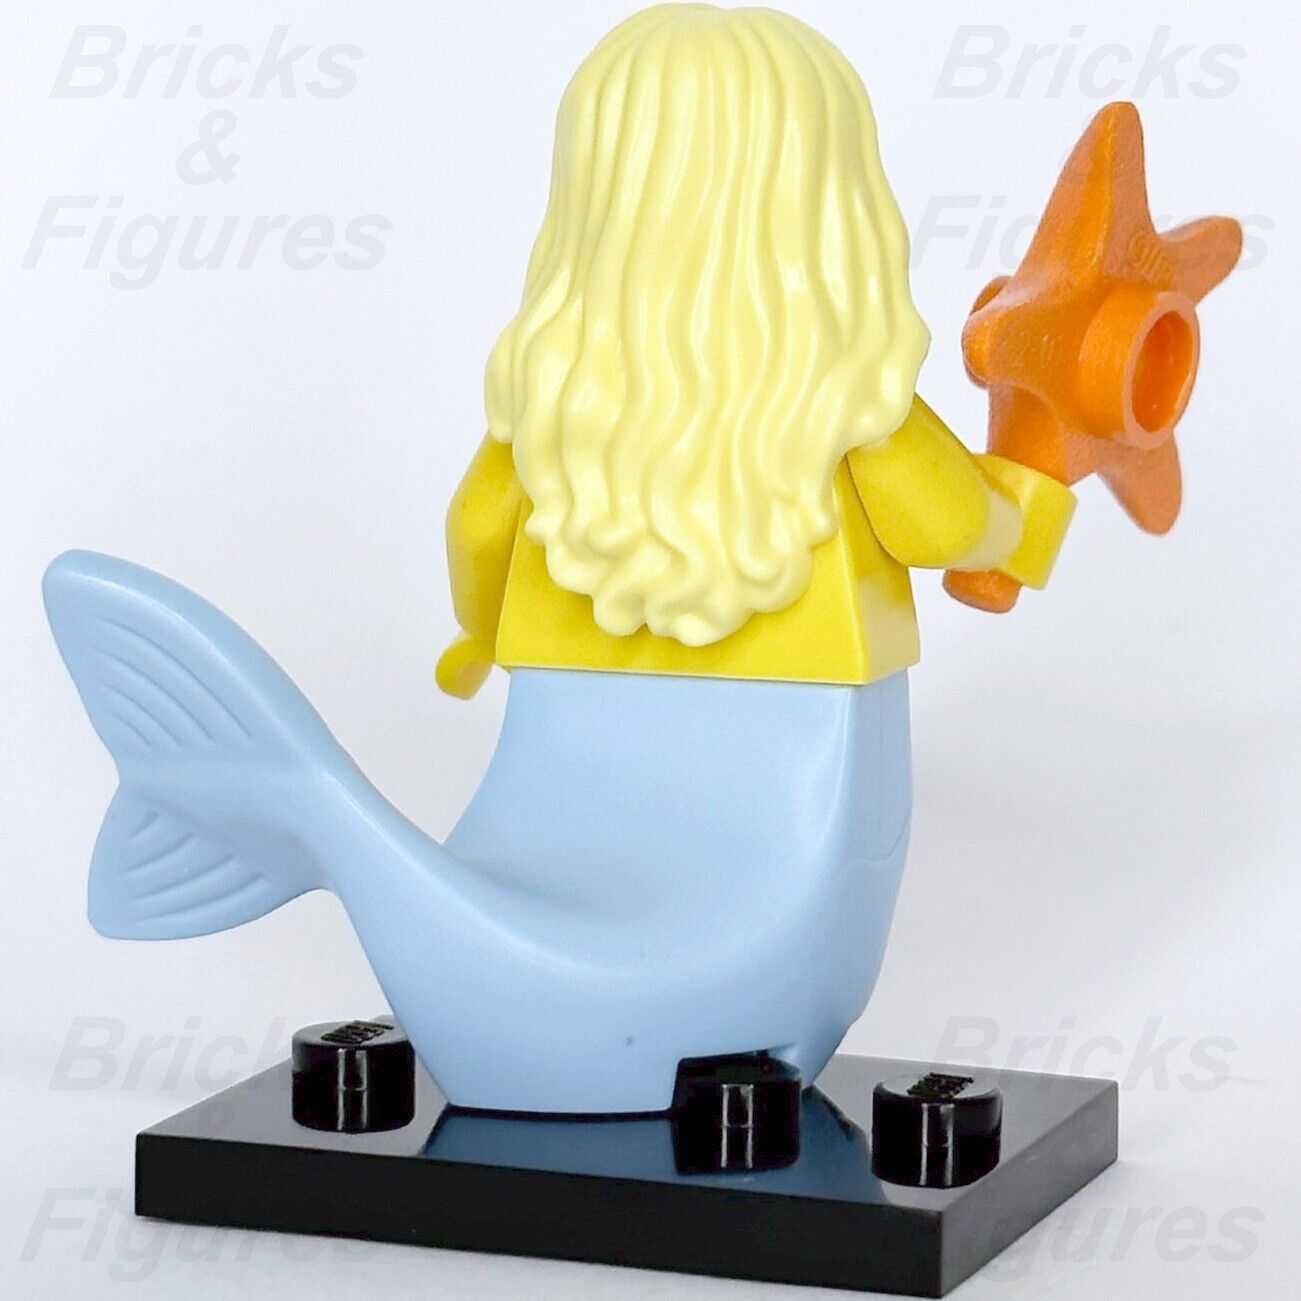 LEGO Mermaid Minifigure with Starfish Collectible Series 9 71000 #12 col09-12 - Bricks & Figures